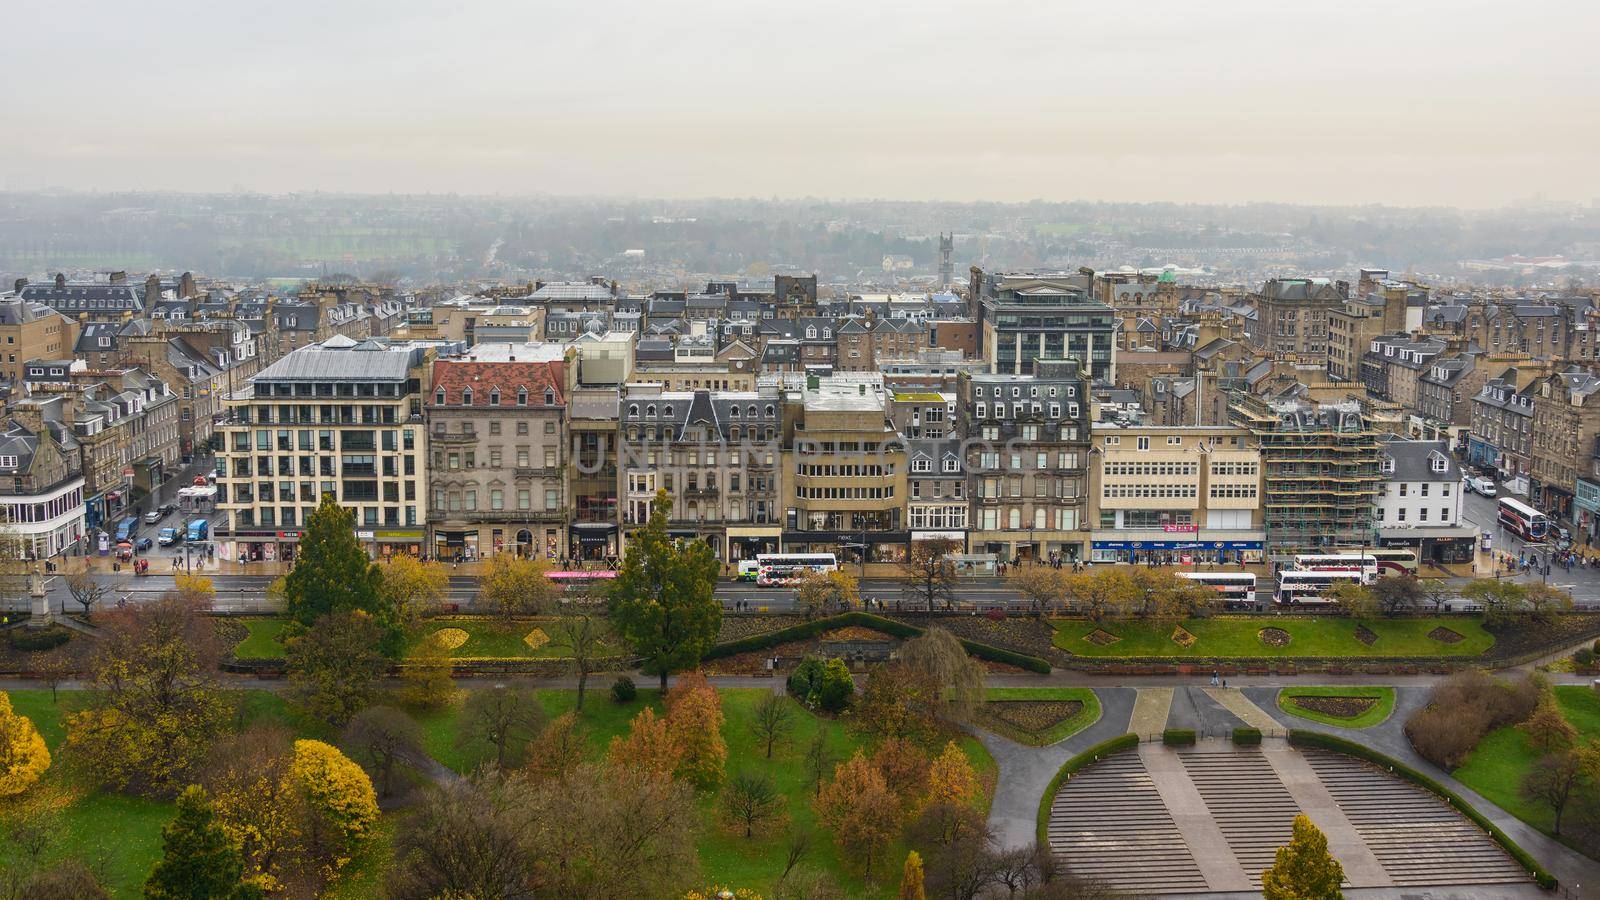 Edinburgh as seen from the castle, in Scotland, UK by dutourdumonde